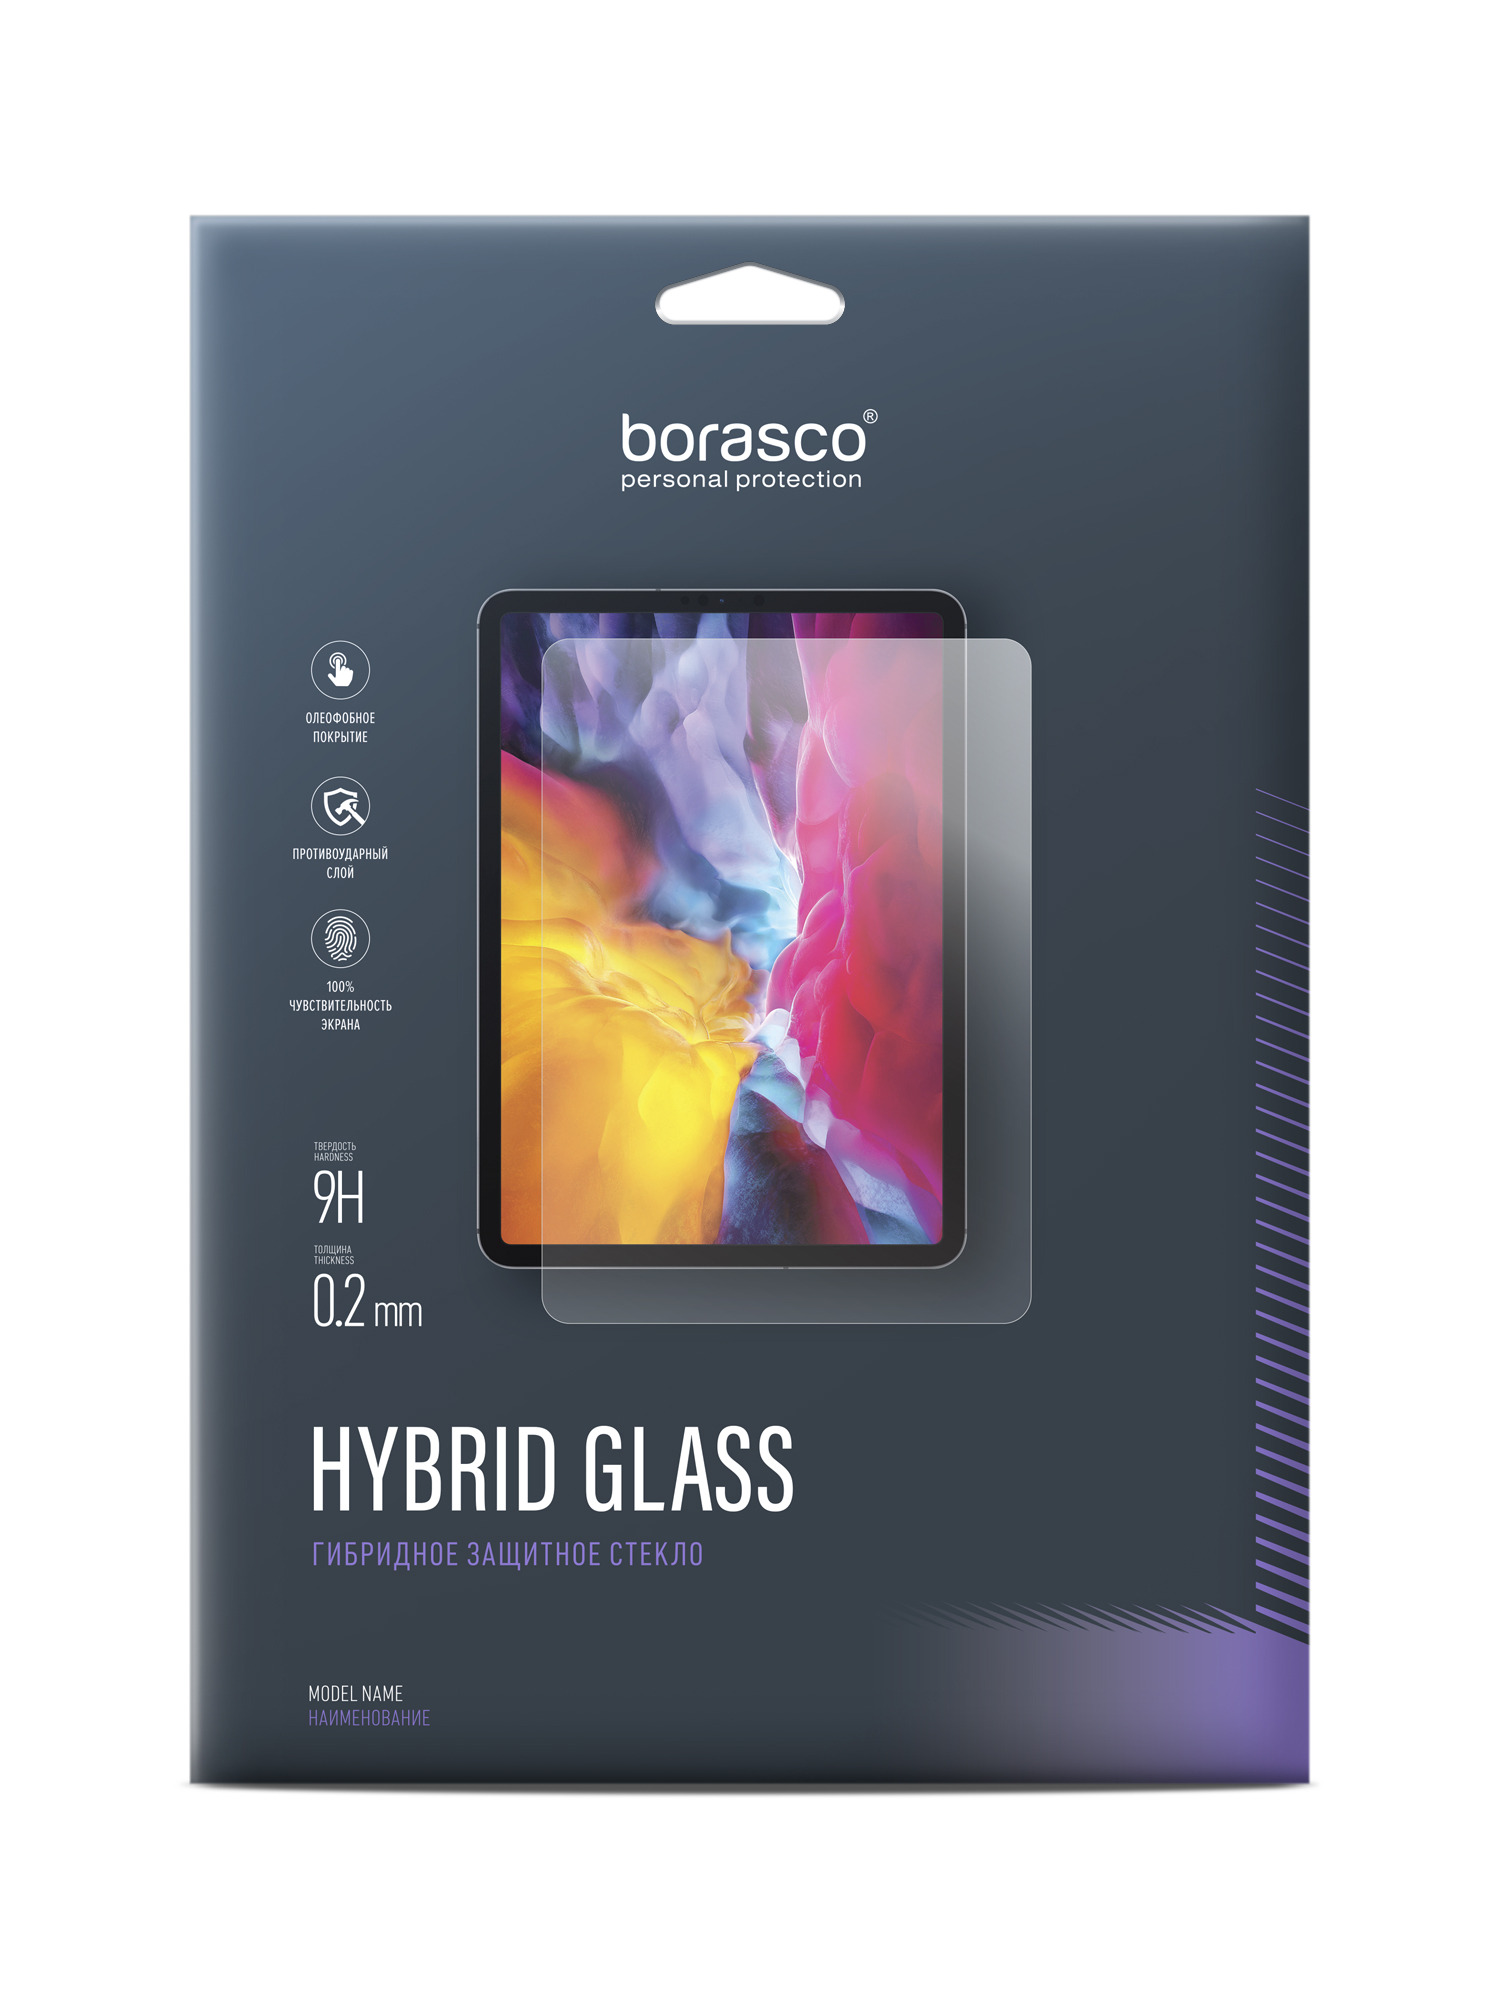 Защитное стекло Hybrid Glass для Samsung Galaxy Tab A 10.5 SM-T590/595 защитное стекло для samsung galaxy tab a 10 5 sm t590 sm t595